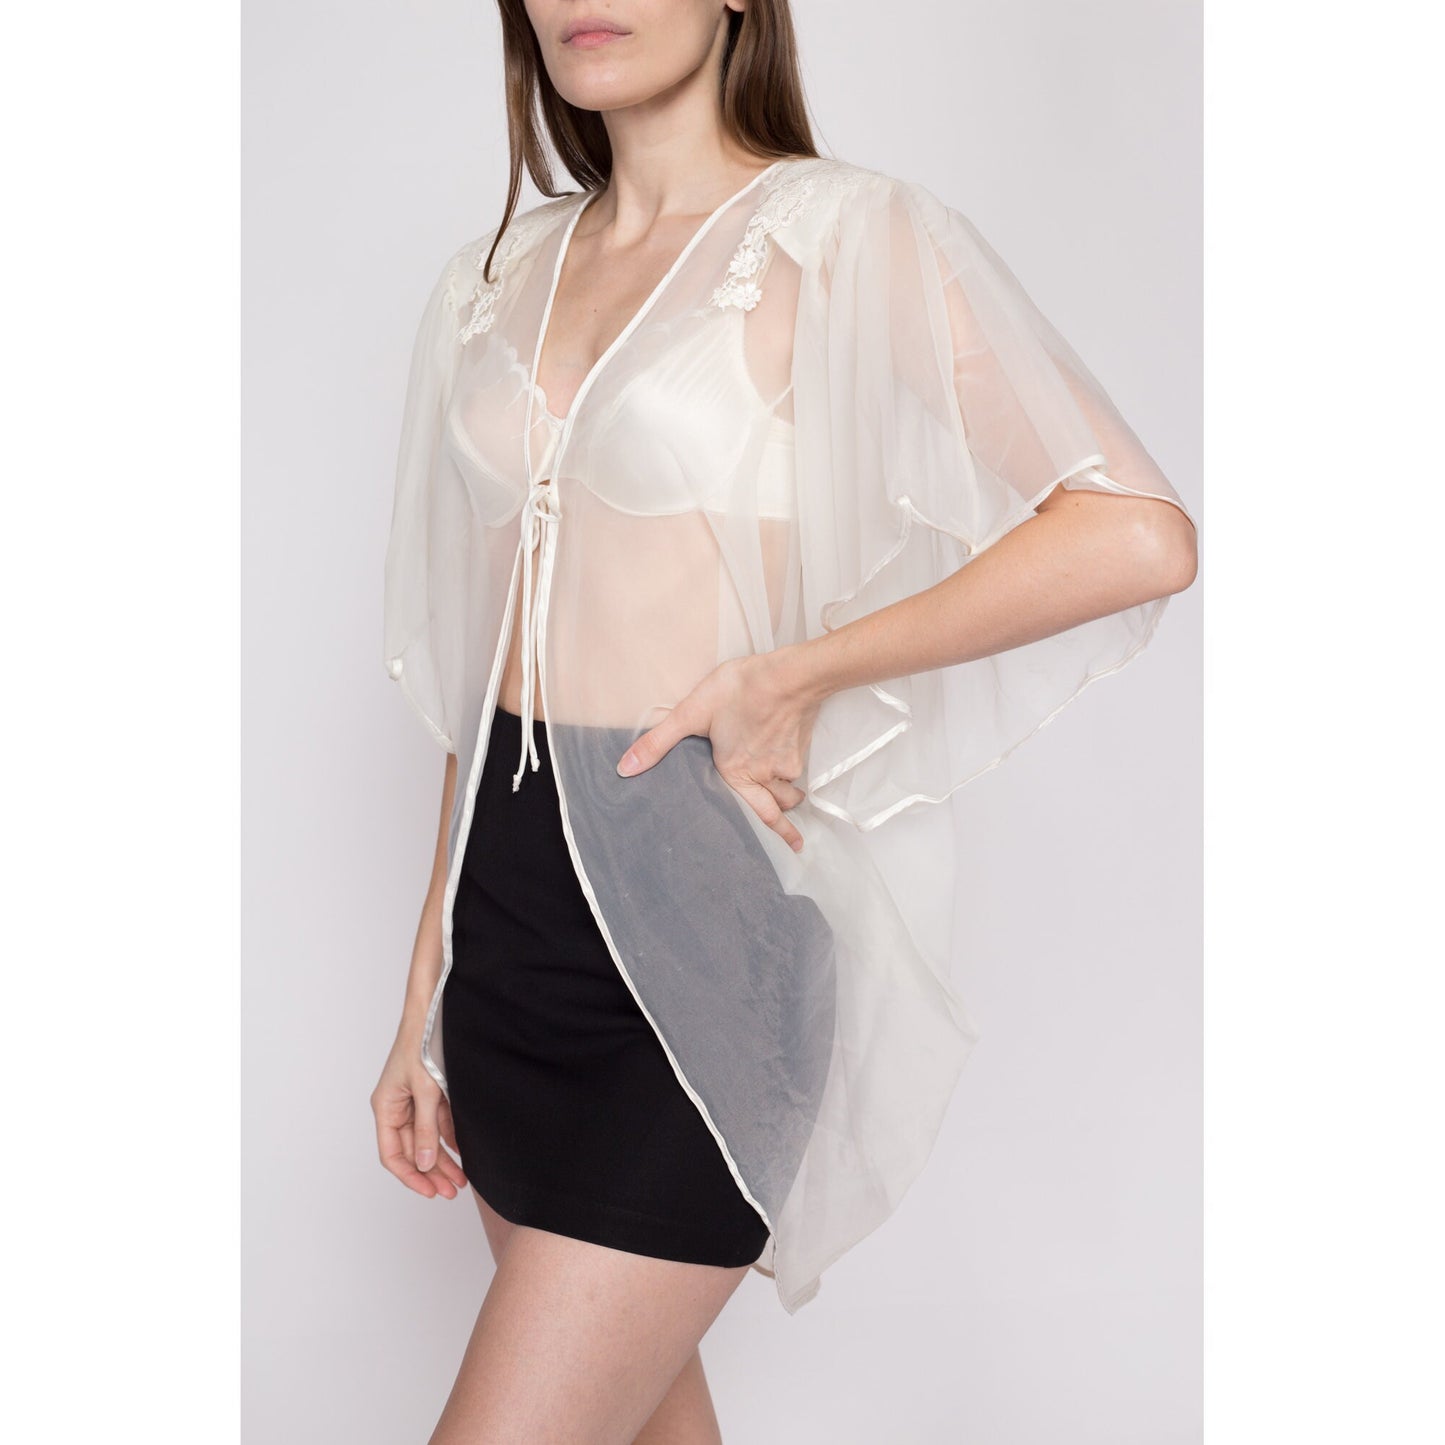 M| 80s Val Mode Sheer White Peignoir - Medium | Vintage Lace Trim Boho Open Fit Loungewear Lingerie Top